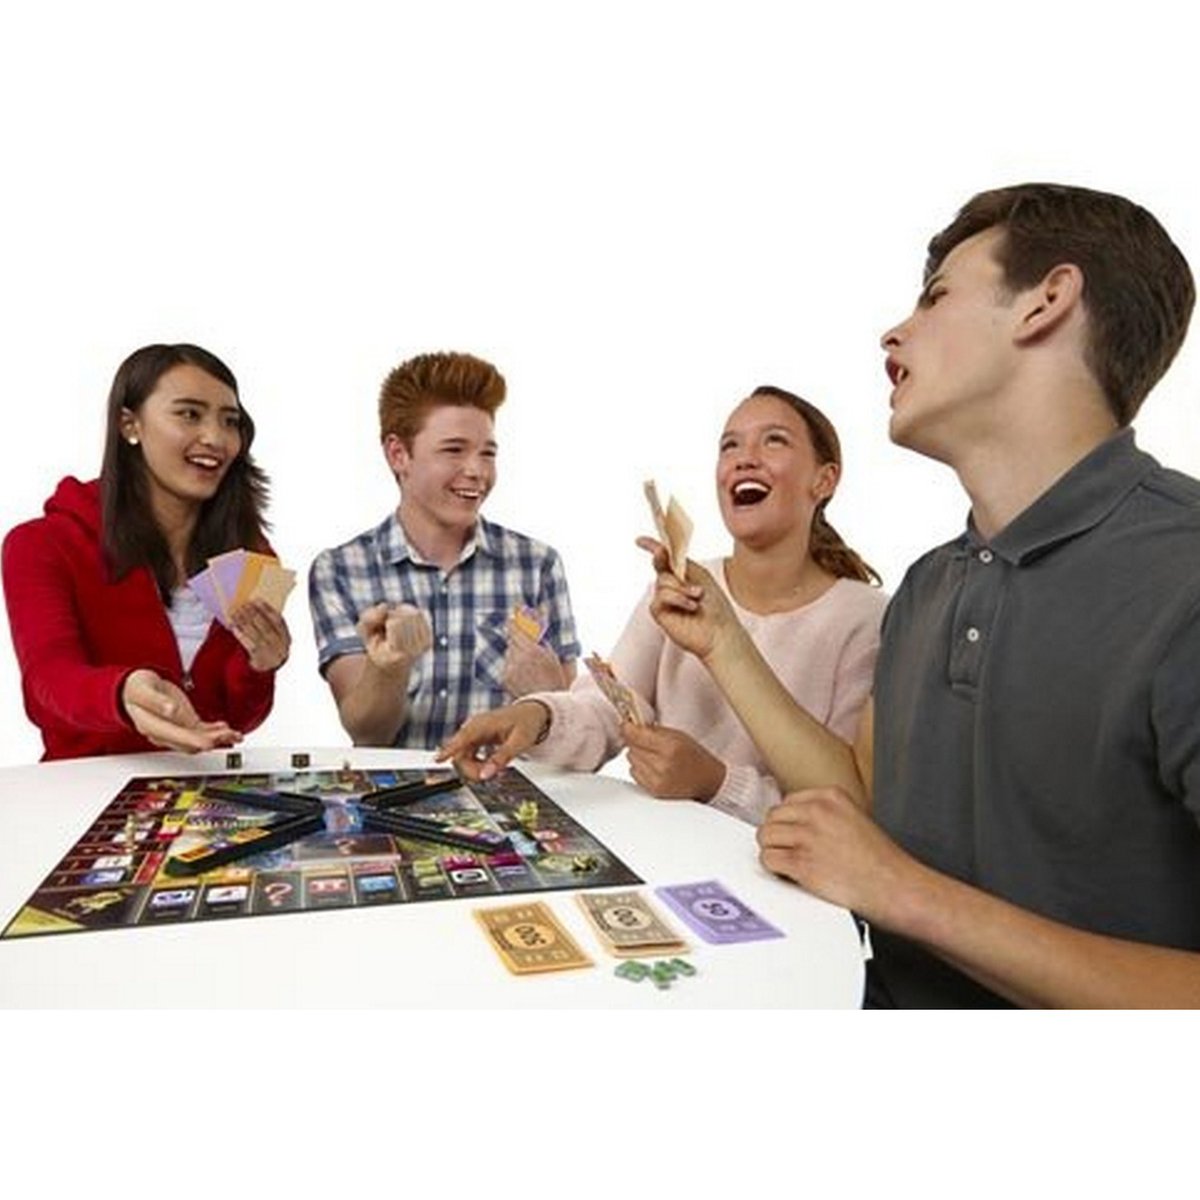 Hasbro Monopoly Empire Game Multicolor A4770